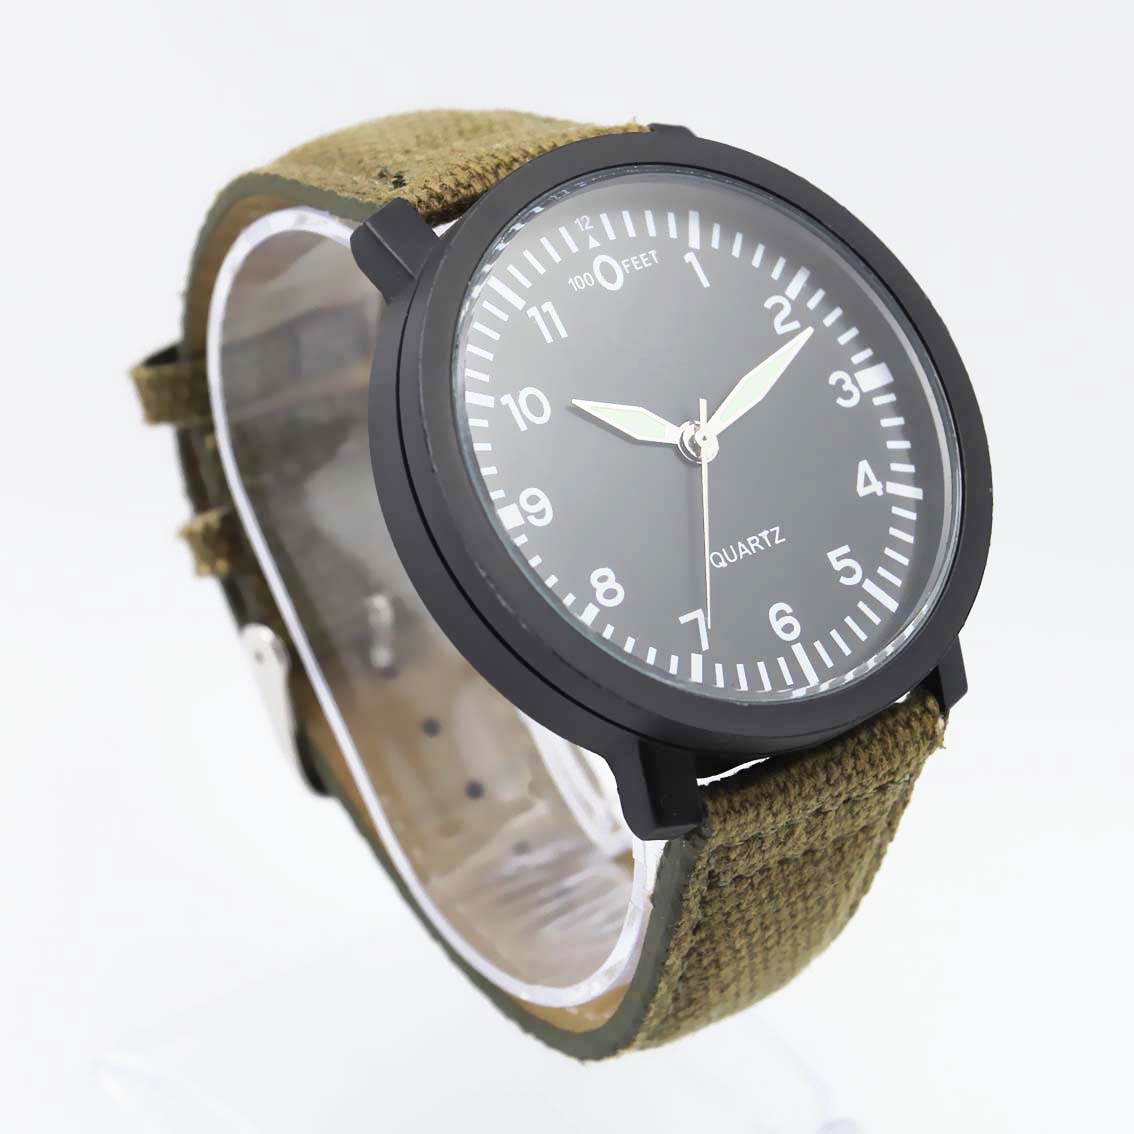 #02085Men's wristwatch quartz analog leather strap watch